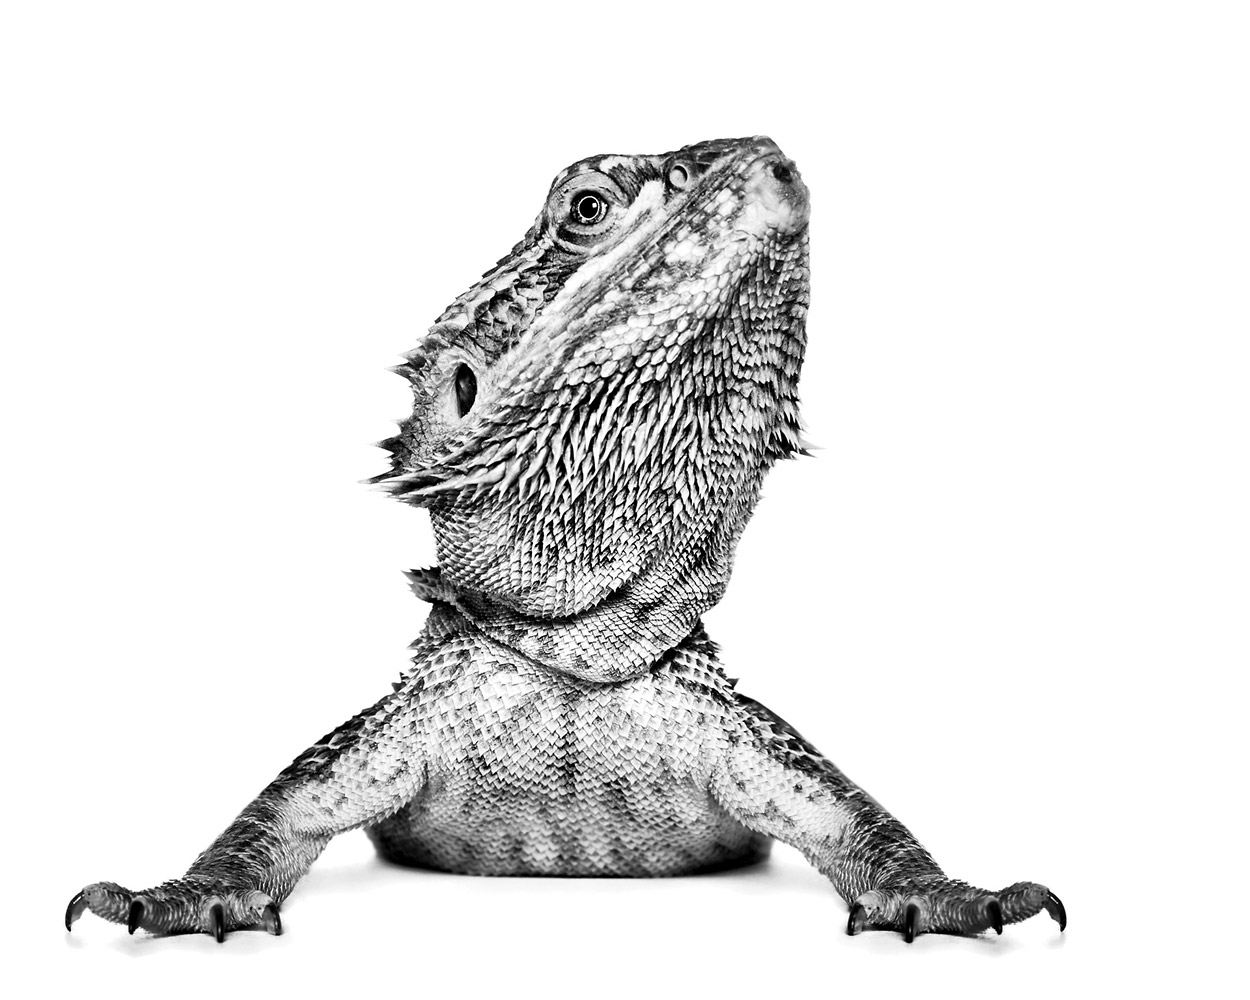 Reptilian, © Alexandra Cearns, North Perth, WA, Australia, Professional : Animal Portraits, PDN Faces - Portrait Photography Contest